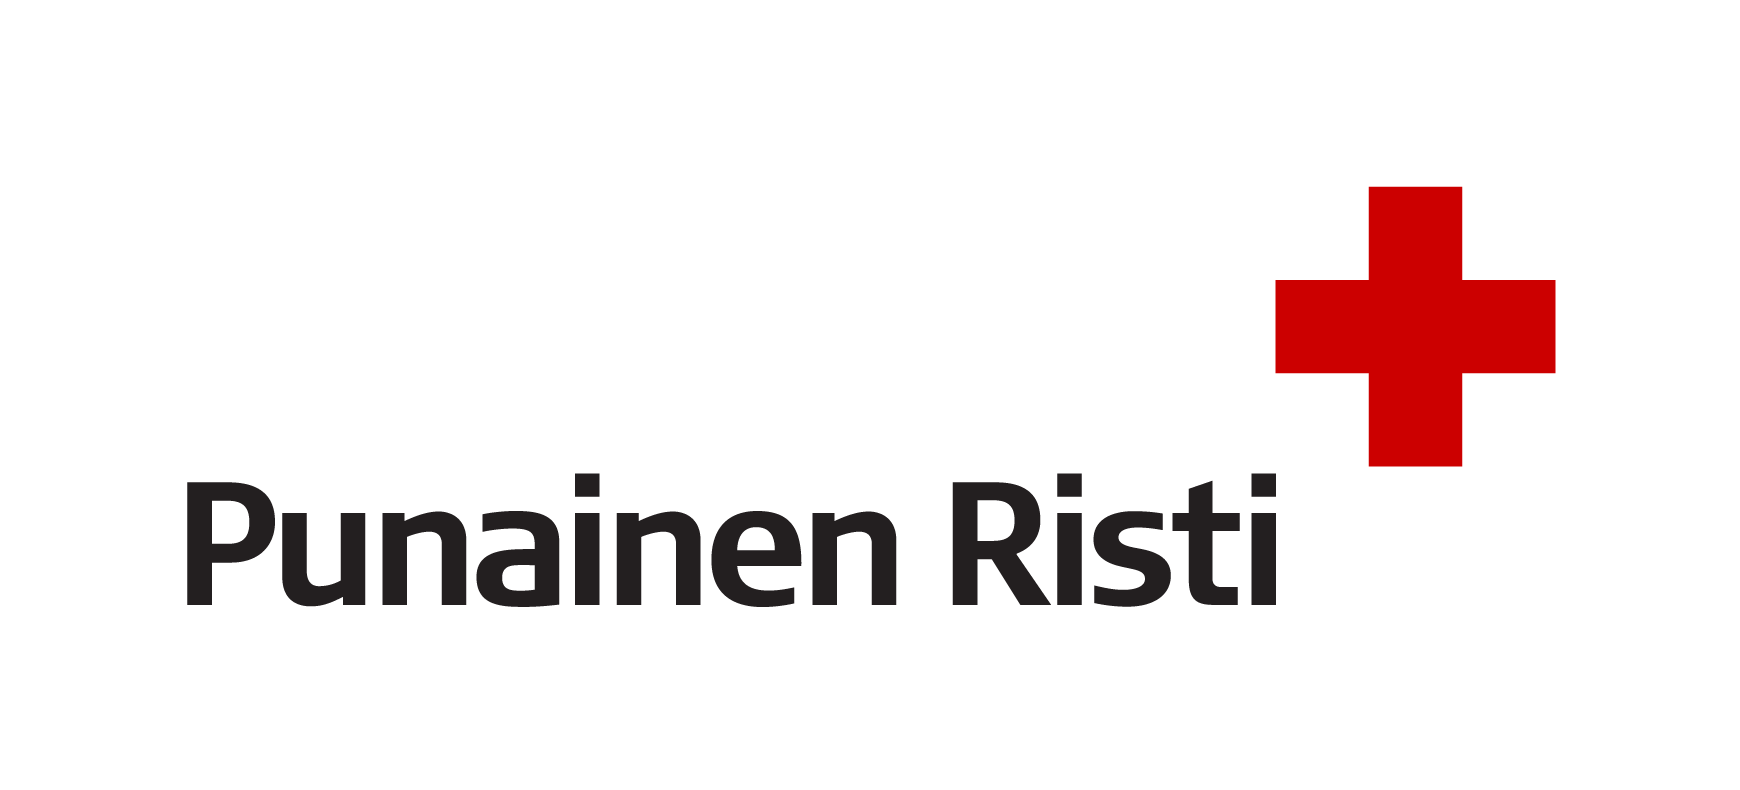 Jrjestn Suomen Punainen Risti logo